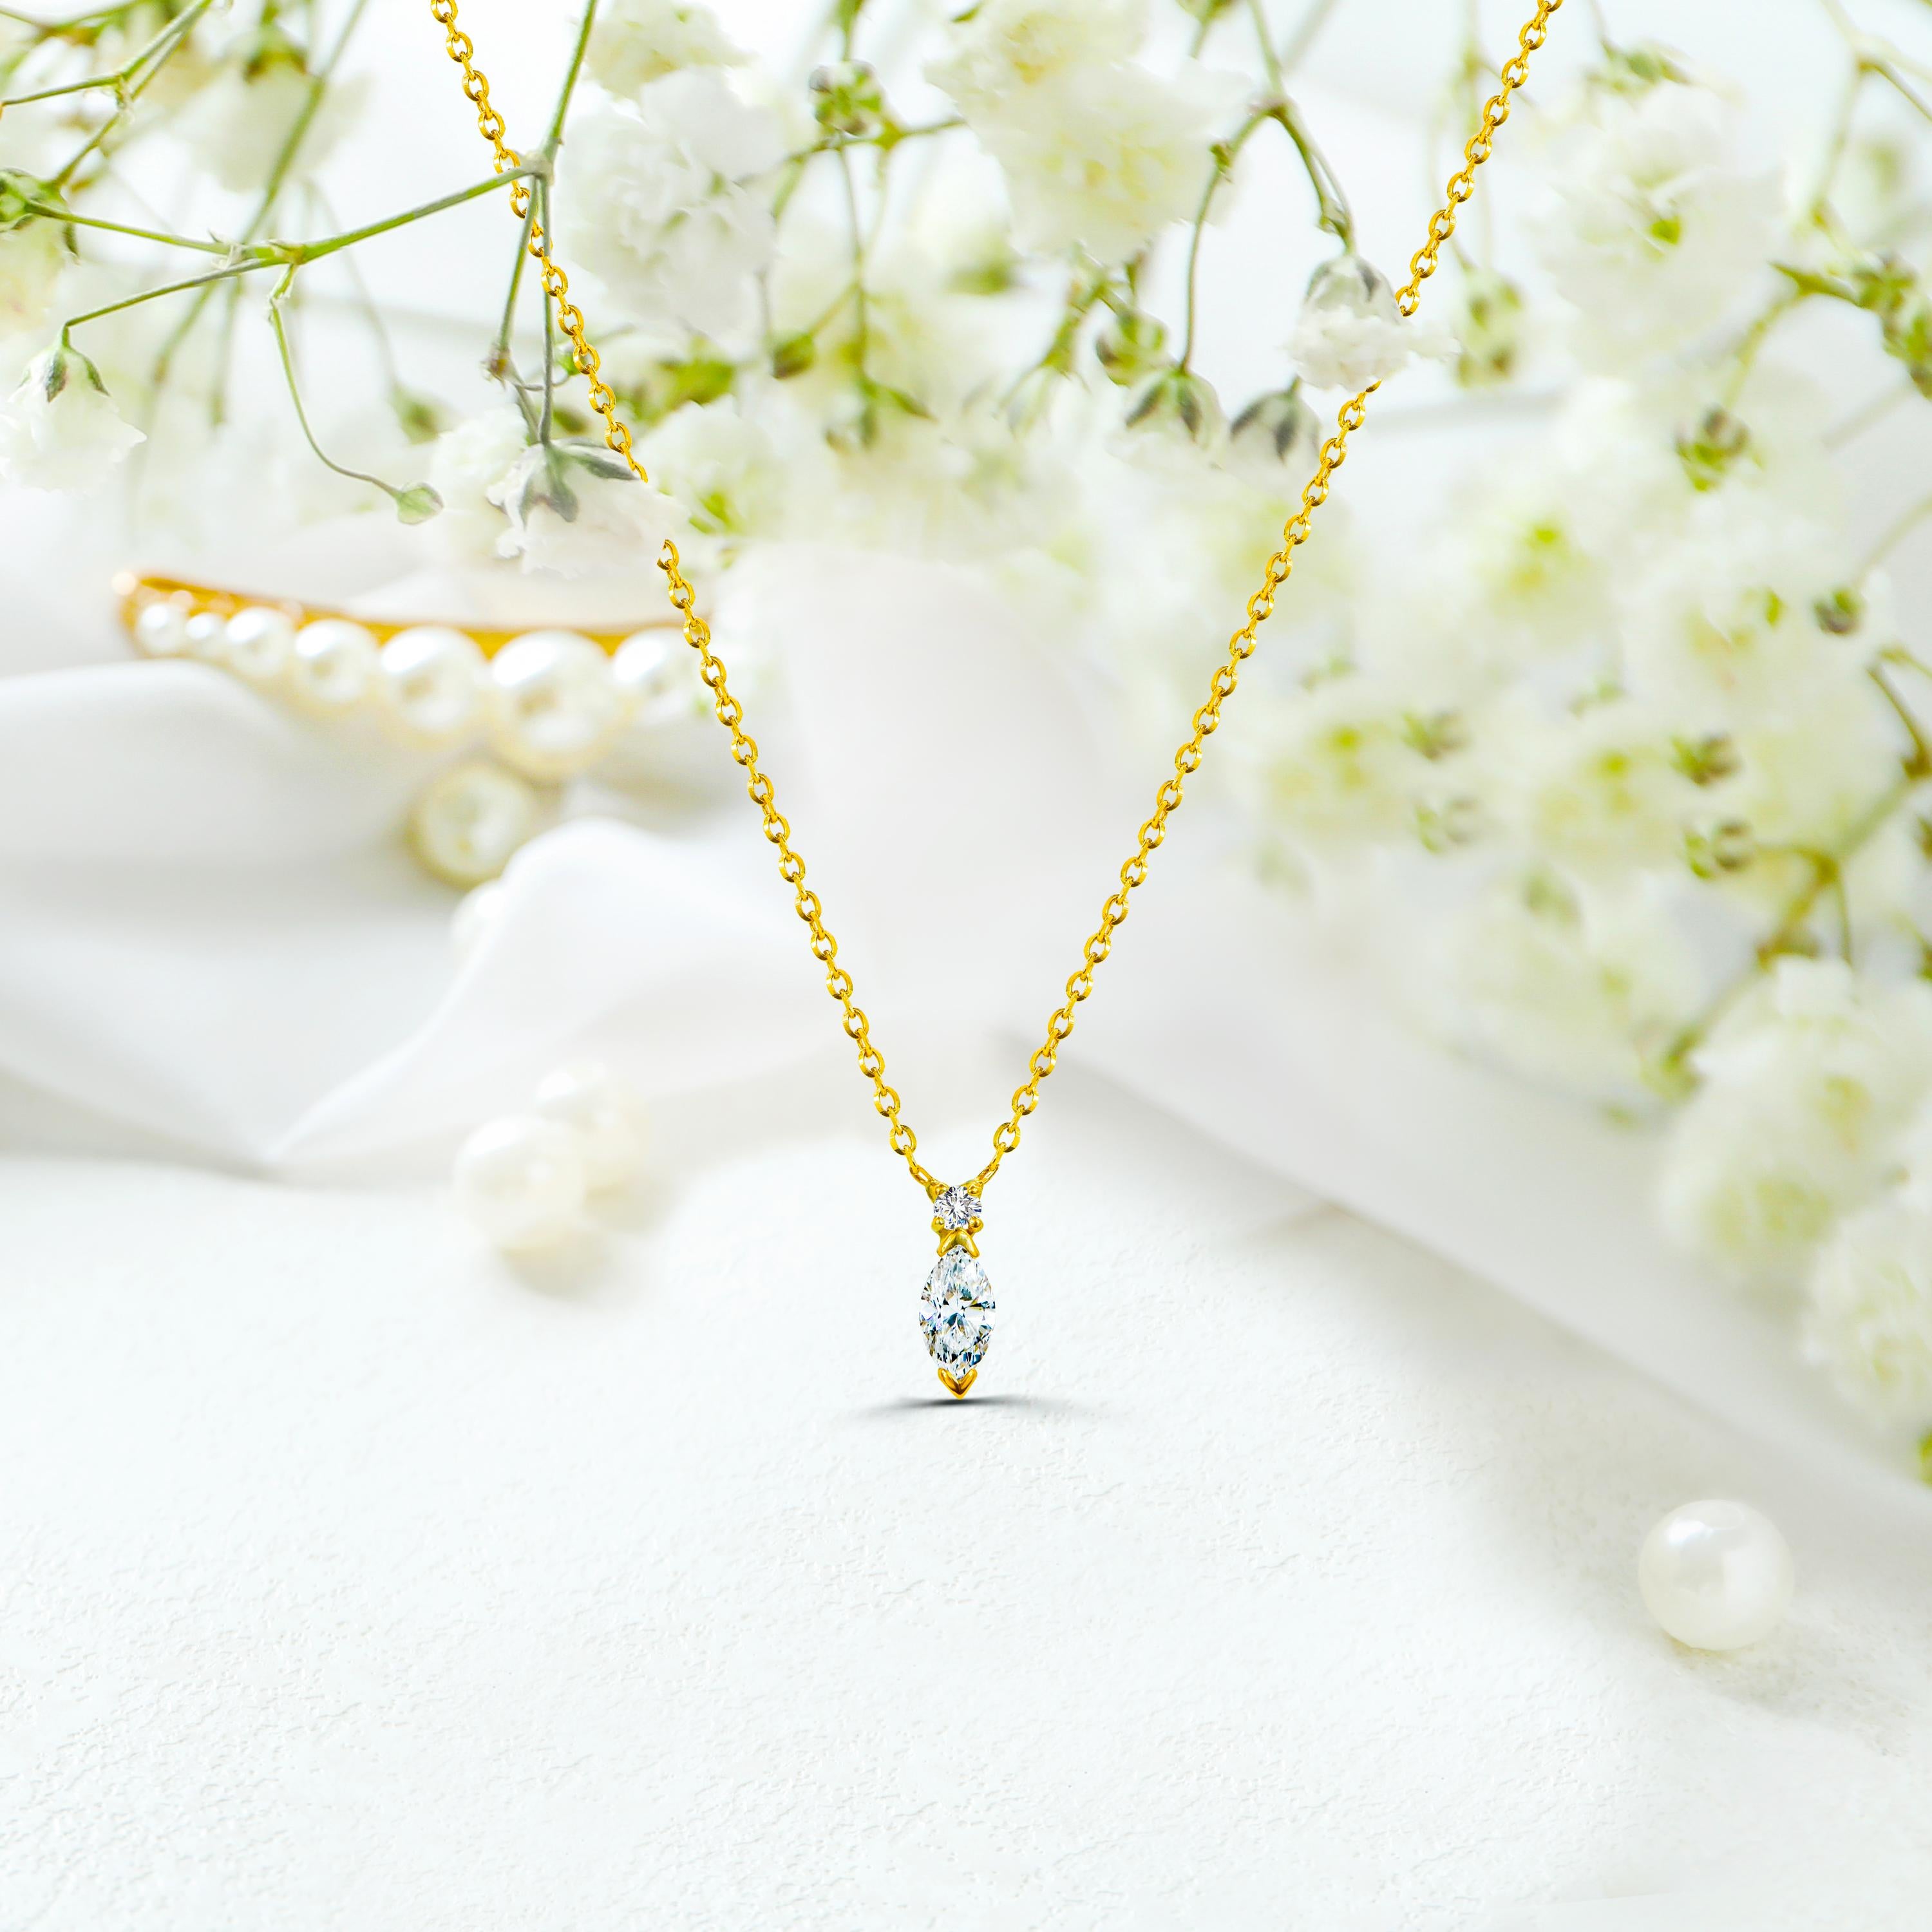 marquise diamond necklace designs